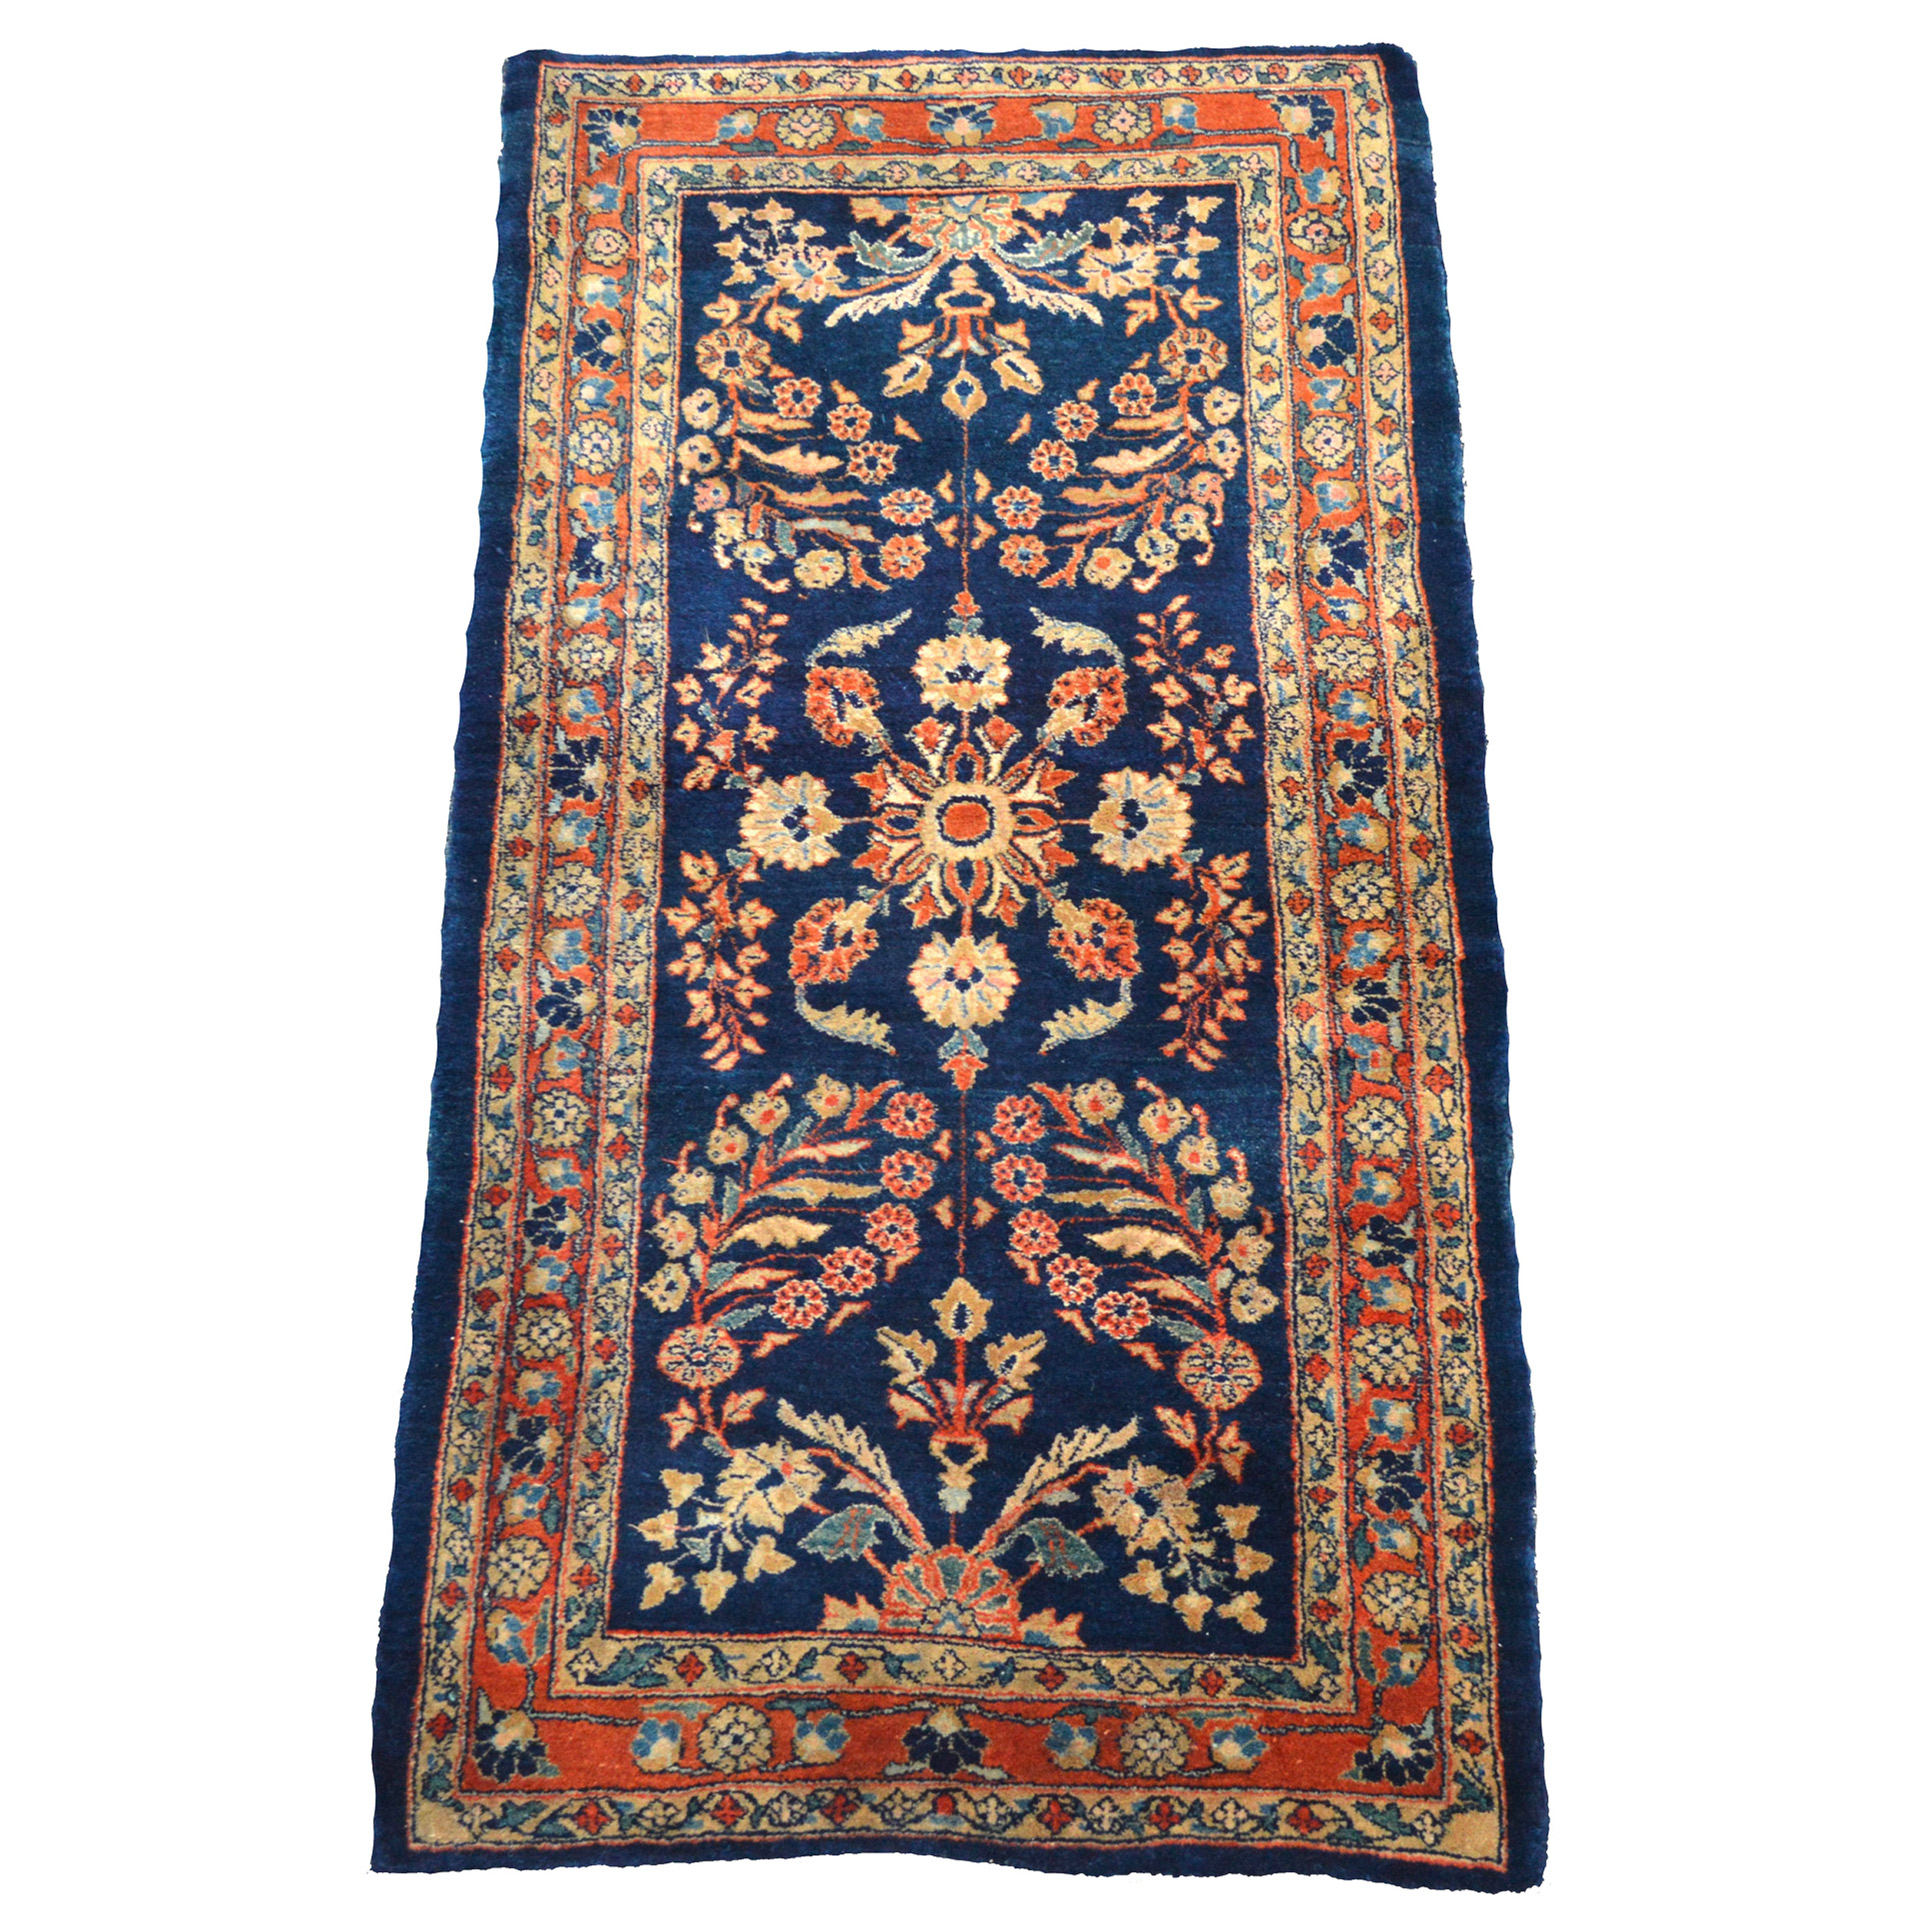 Persian Mahajaran Sarou rug with floral design on navy field - Douglas Stock Gallery, antique Oriental rugs Boston,MA area, South Natick /Wellesley area Oriental rugs